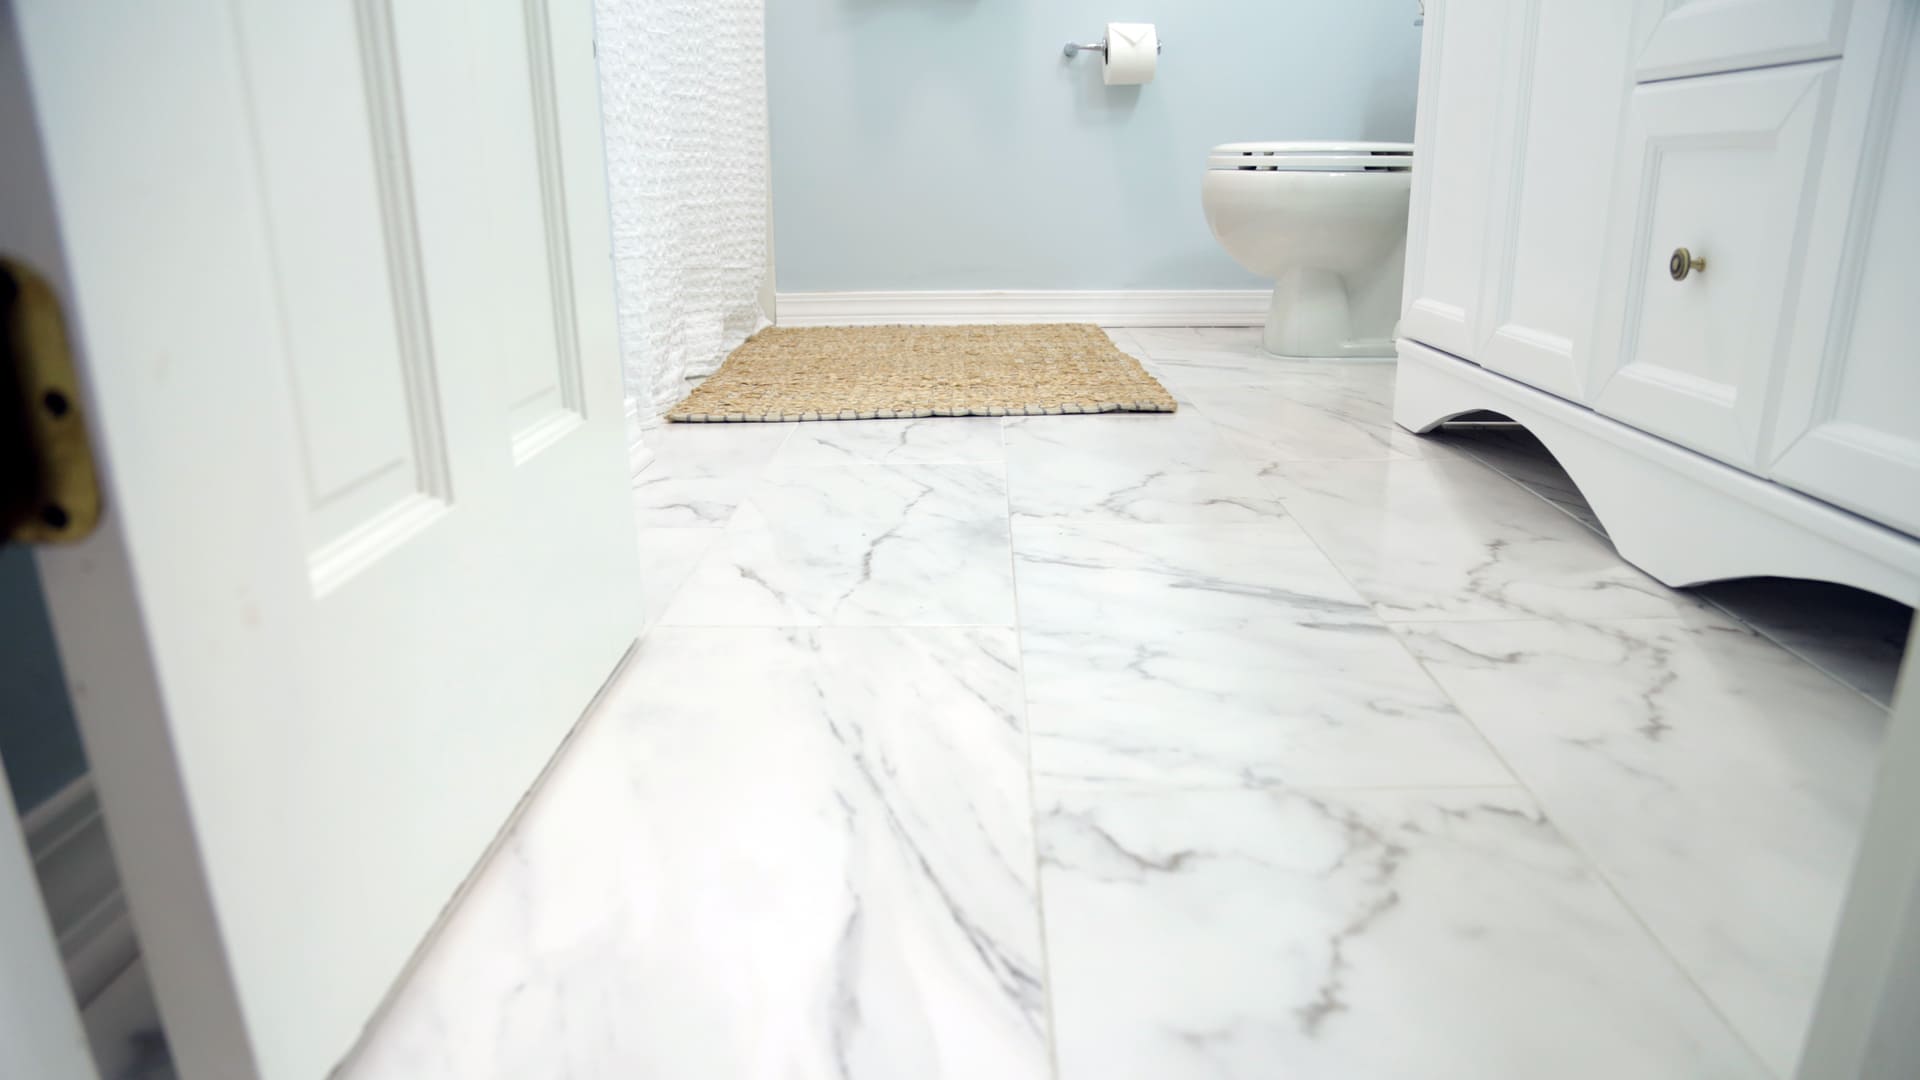 How To Lay Ceramic Tile On A Floor, How To Install A Tile Bathroom Floor